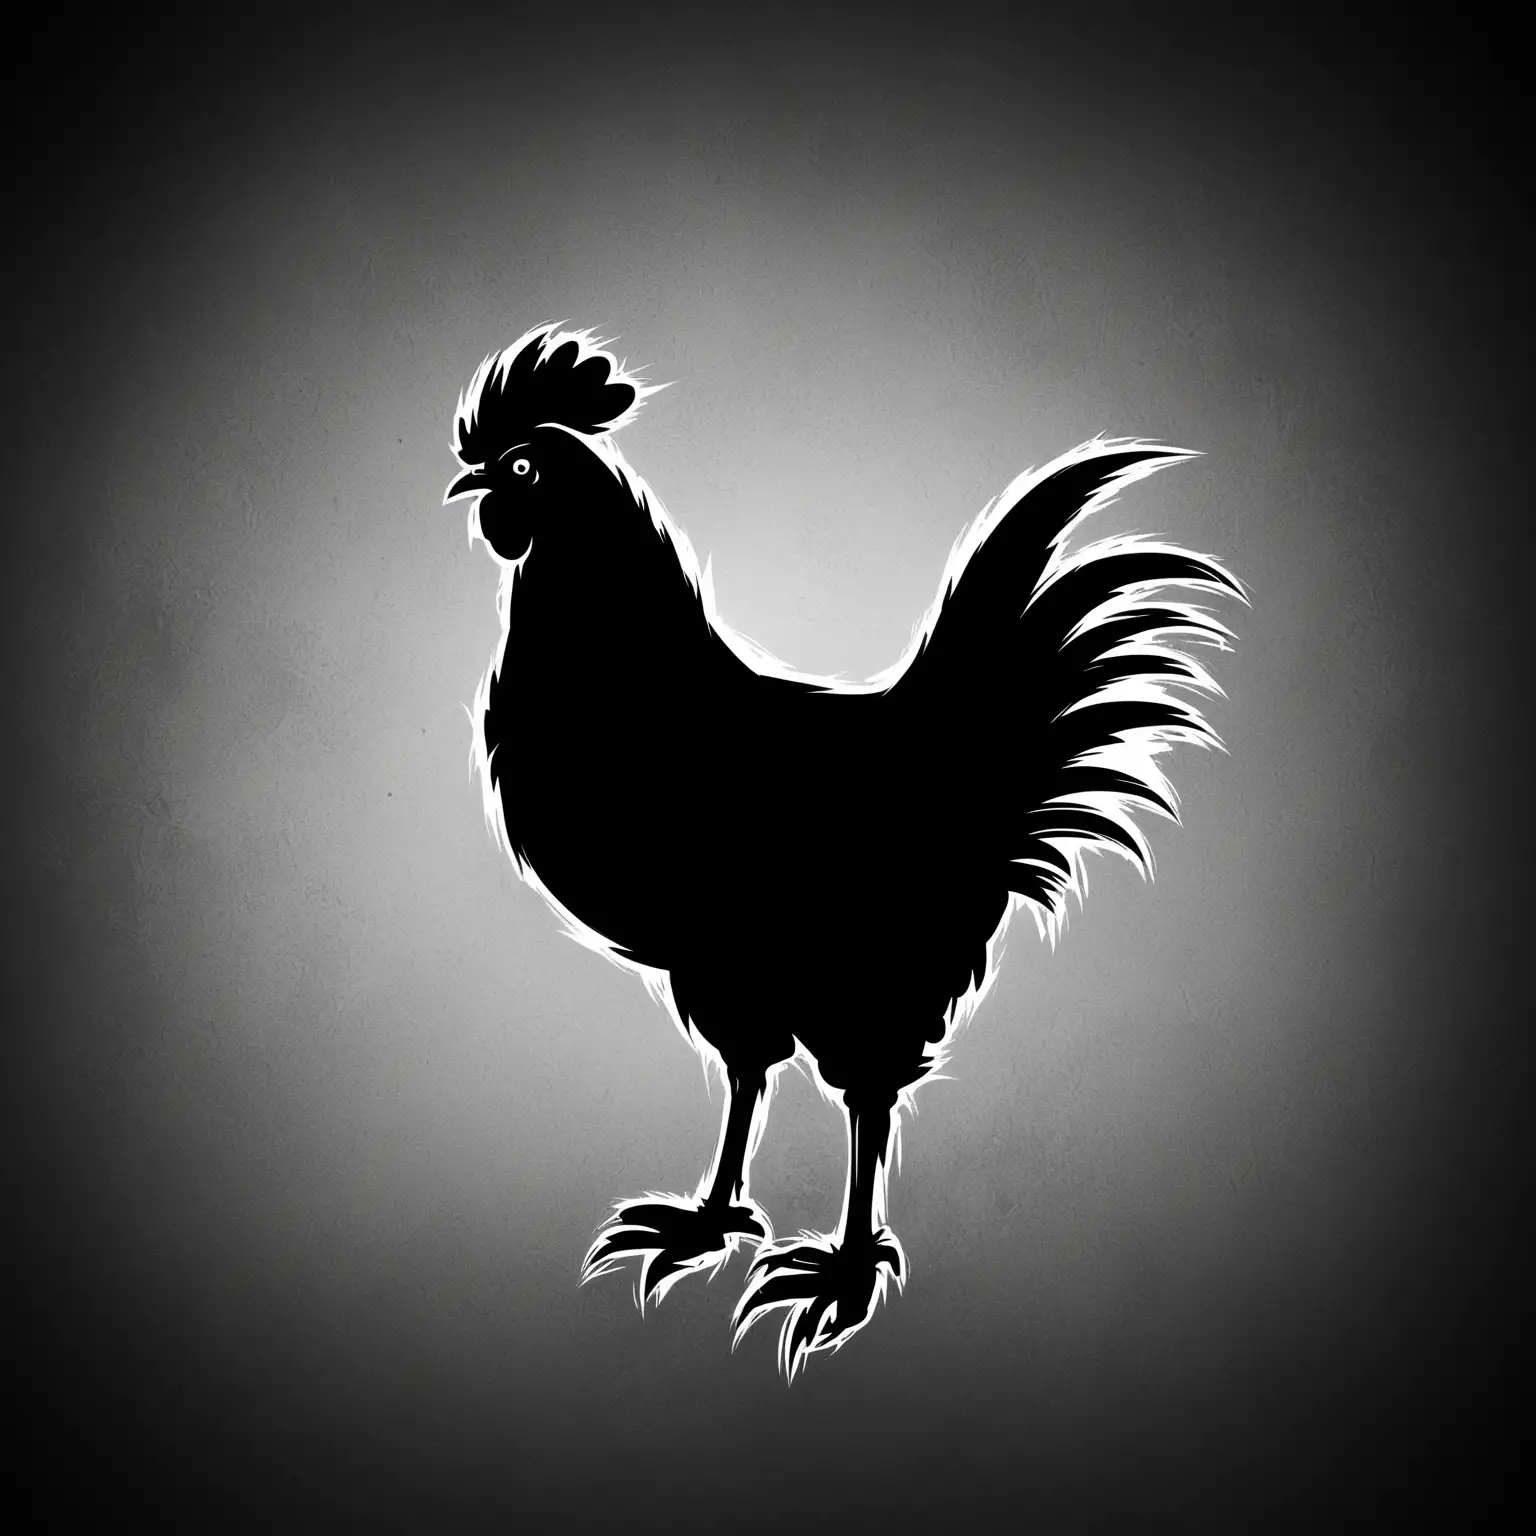 Minimalist Evil Chicken Silhouette Simple Stencil Vector Art in Black and White